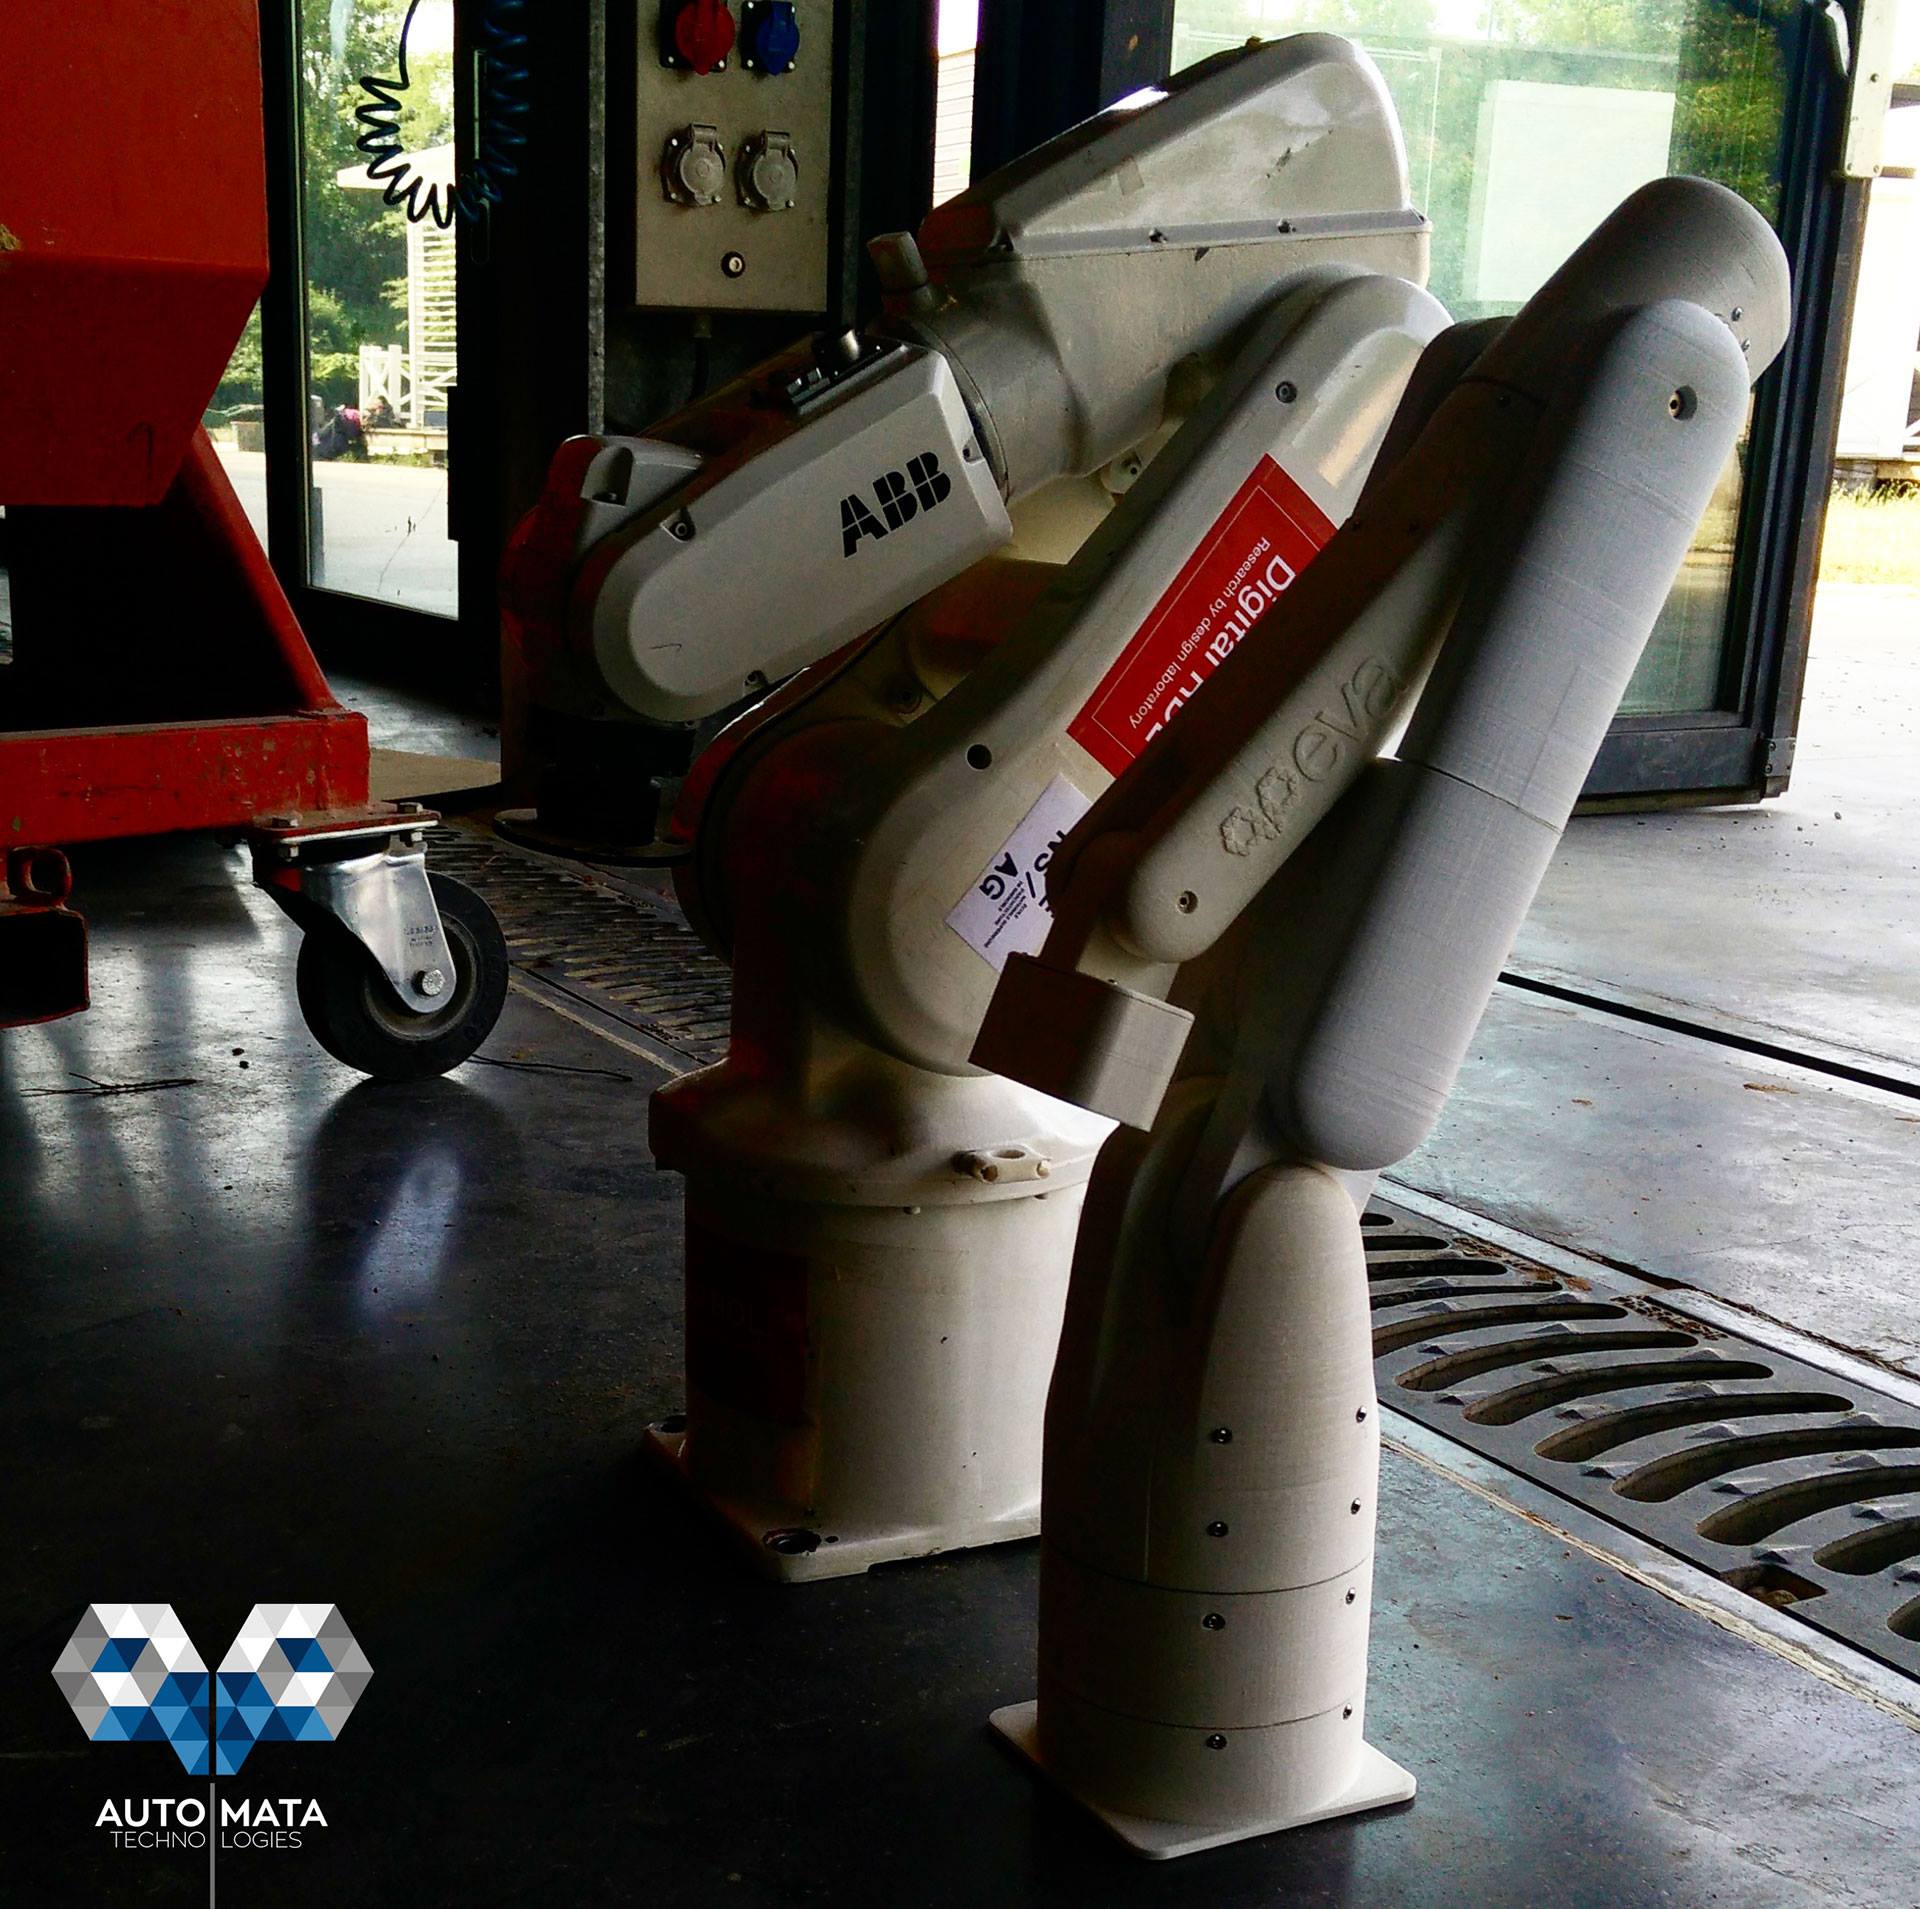 voks Ræv Ambitiøs Automata to Launch 'Eva' This Summer - Intuitive 3D Printable Robotic Arm -  3DPrint.com | The Voice of 3D Printing / Additive Manufacturing